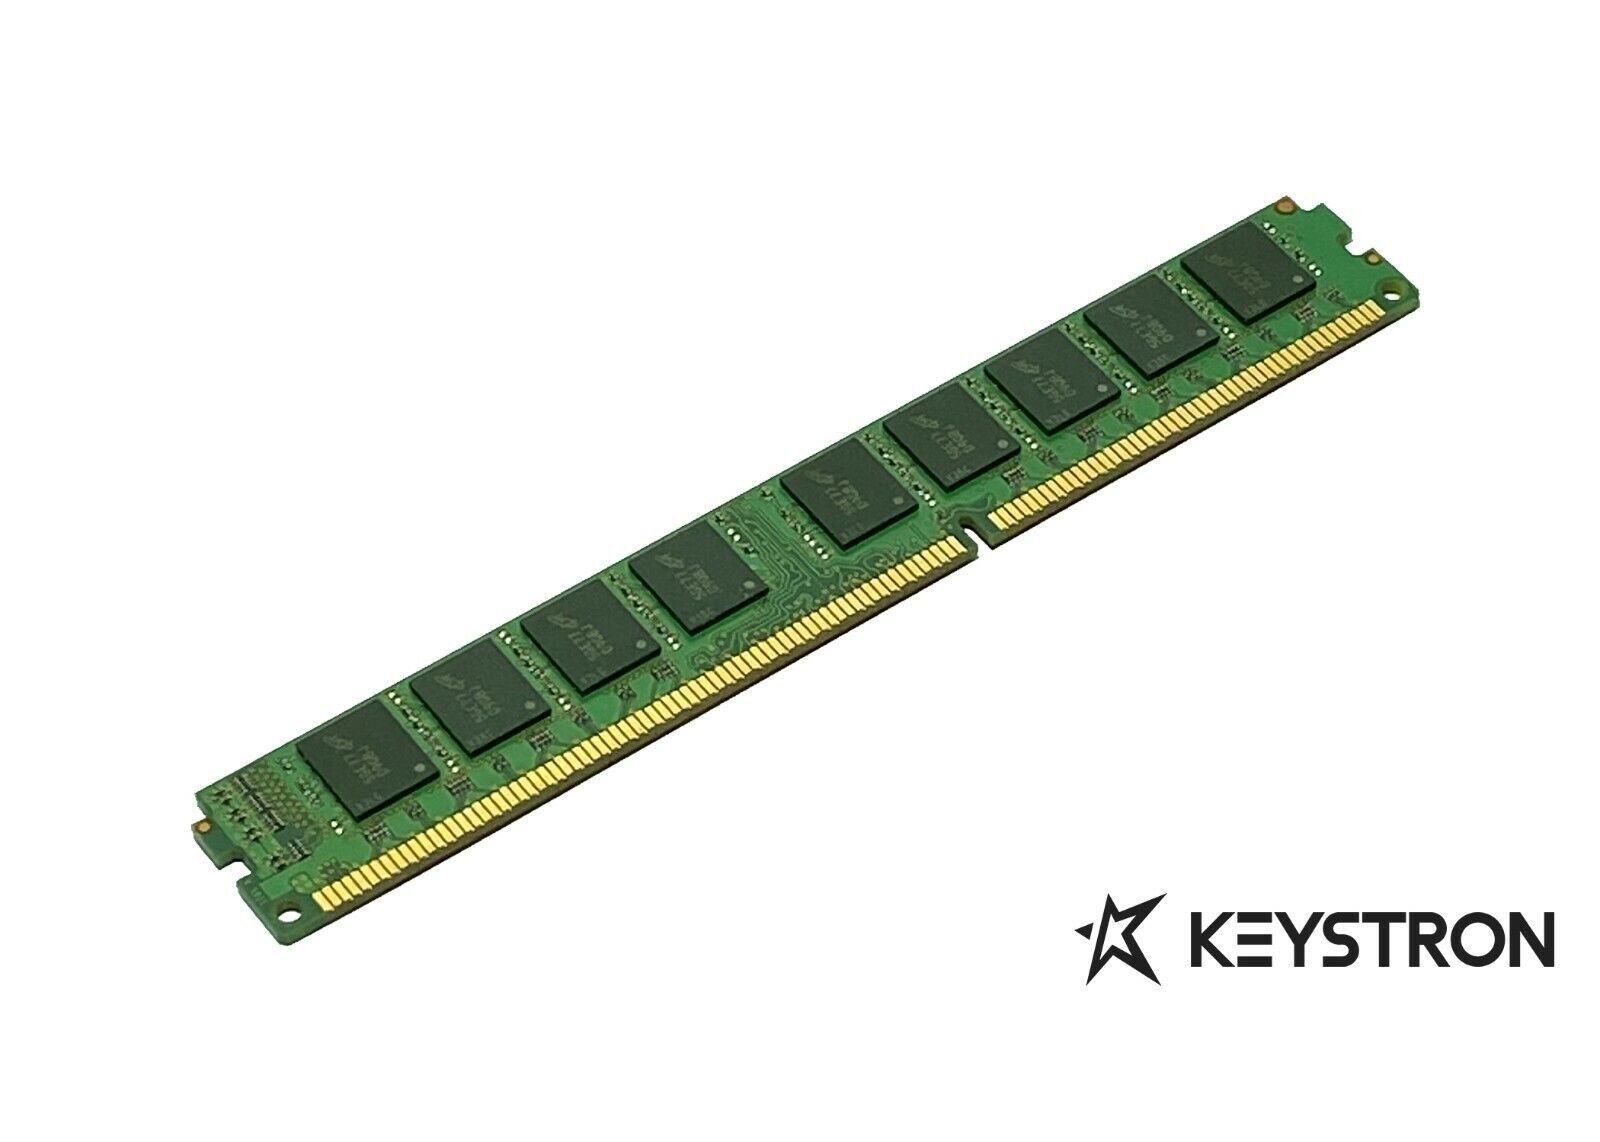 MEM-4300-8G= (1x8GB) 8GB Compatible Memory Upgrade Module For Cisco ISR 4300